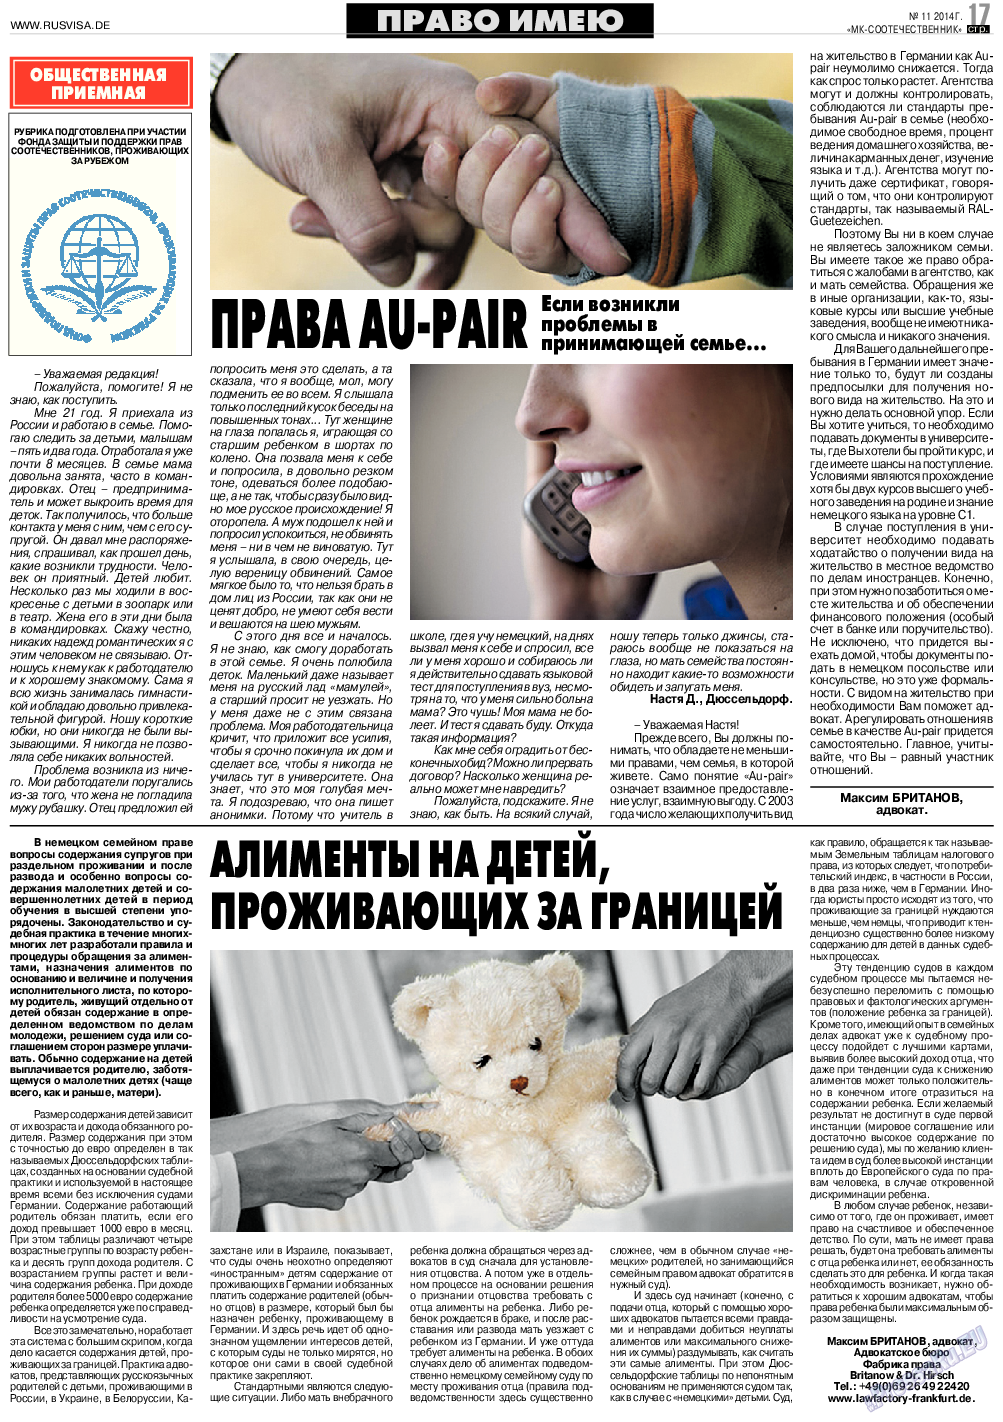 МК-Германия планета мнений, газета. 2014 №11 стр.17